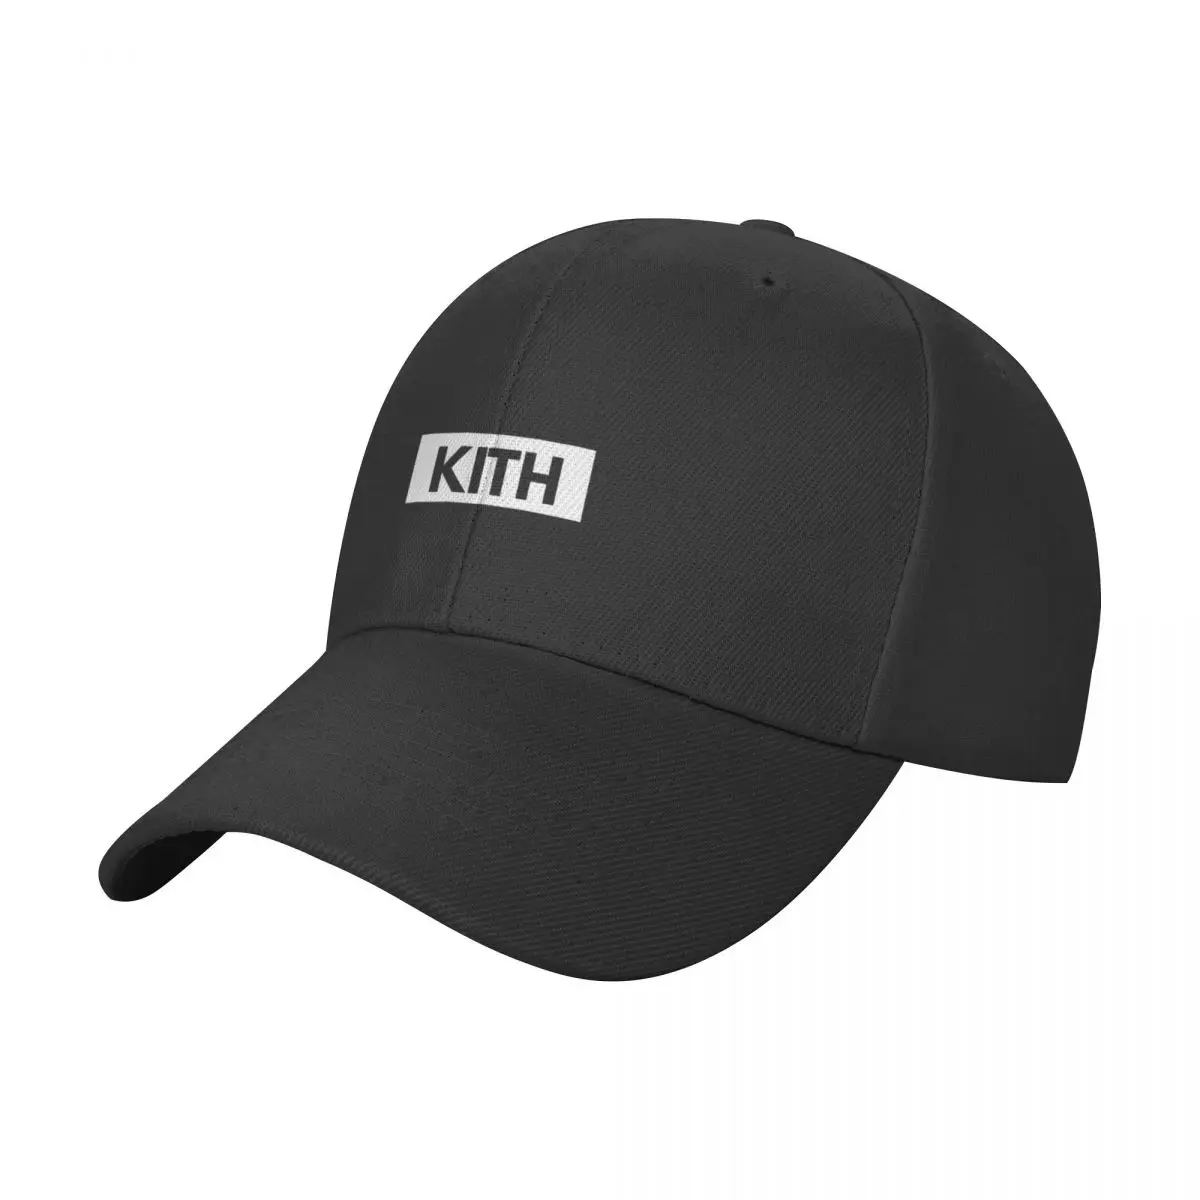 Kith Baseball Cap funny hat Brand Man cap Men Luxury Brand Women's